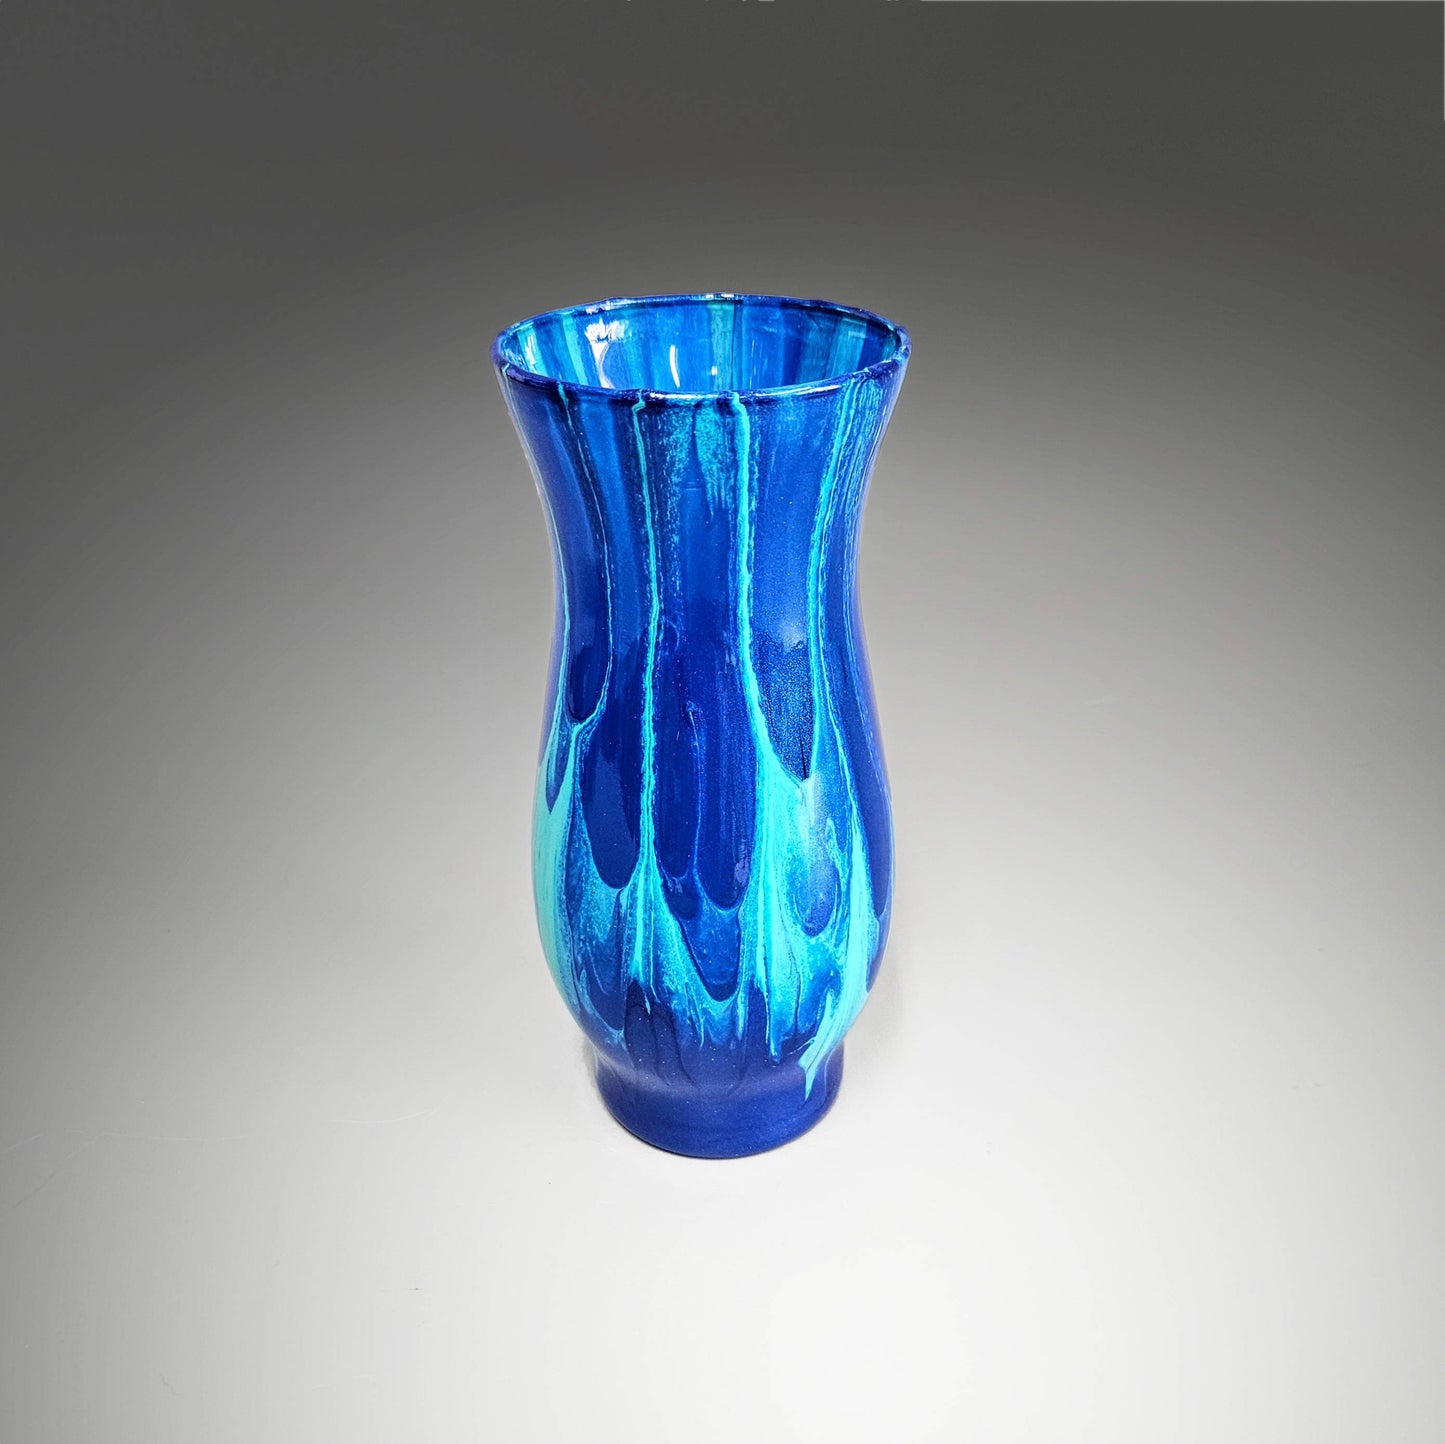 Painted Glass Art Bud Vases in Aqua Navy Blue | Set of 2